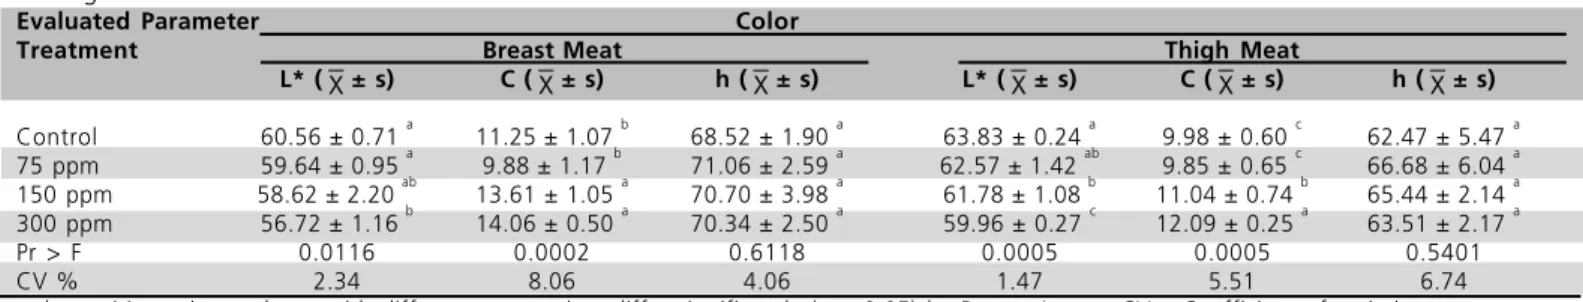 Table 4 - Color attributes (L* - lightness, C  chroma, h  hue) for breast and thigh meat of broilers fed diets containing different levels of R